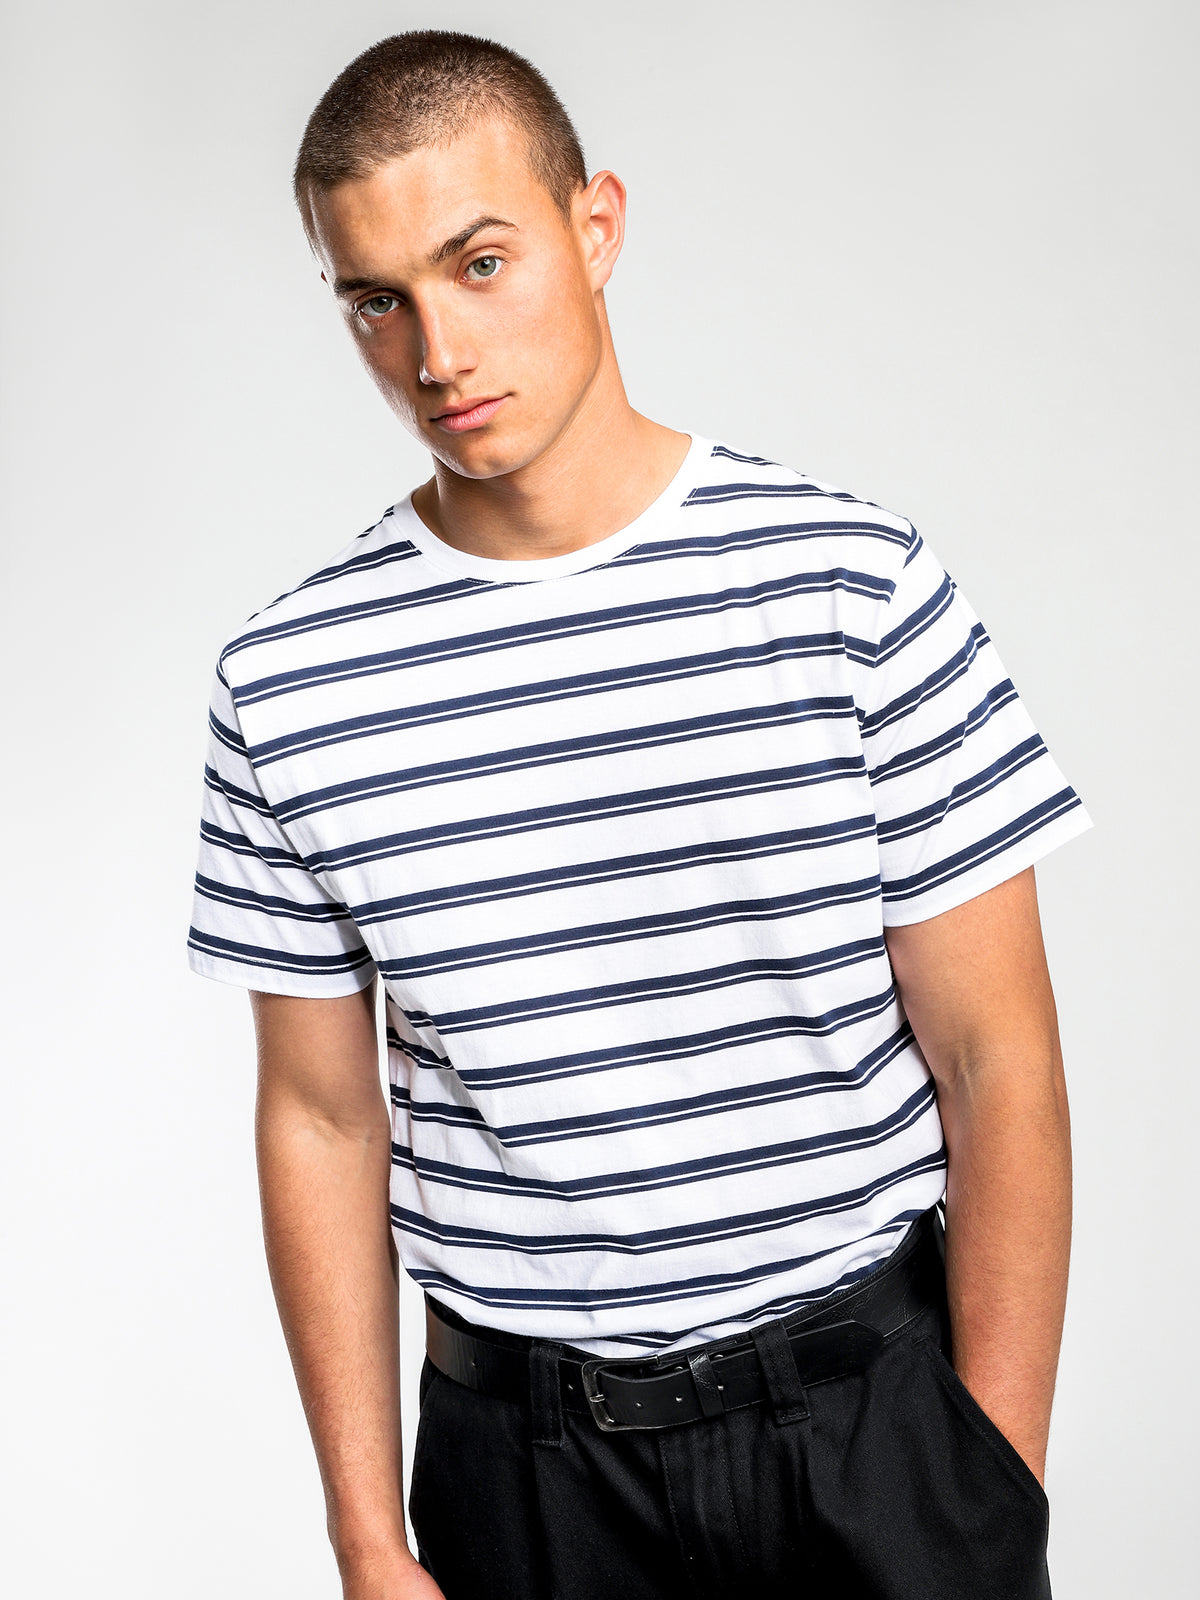 Cayo Short Sleeve T-Shirt in White &amp; Navy Stripe